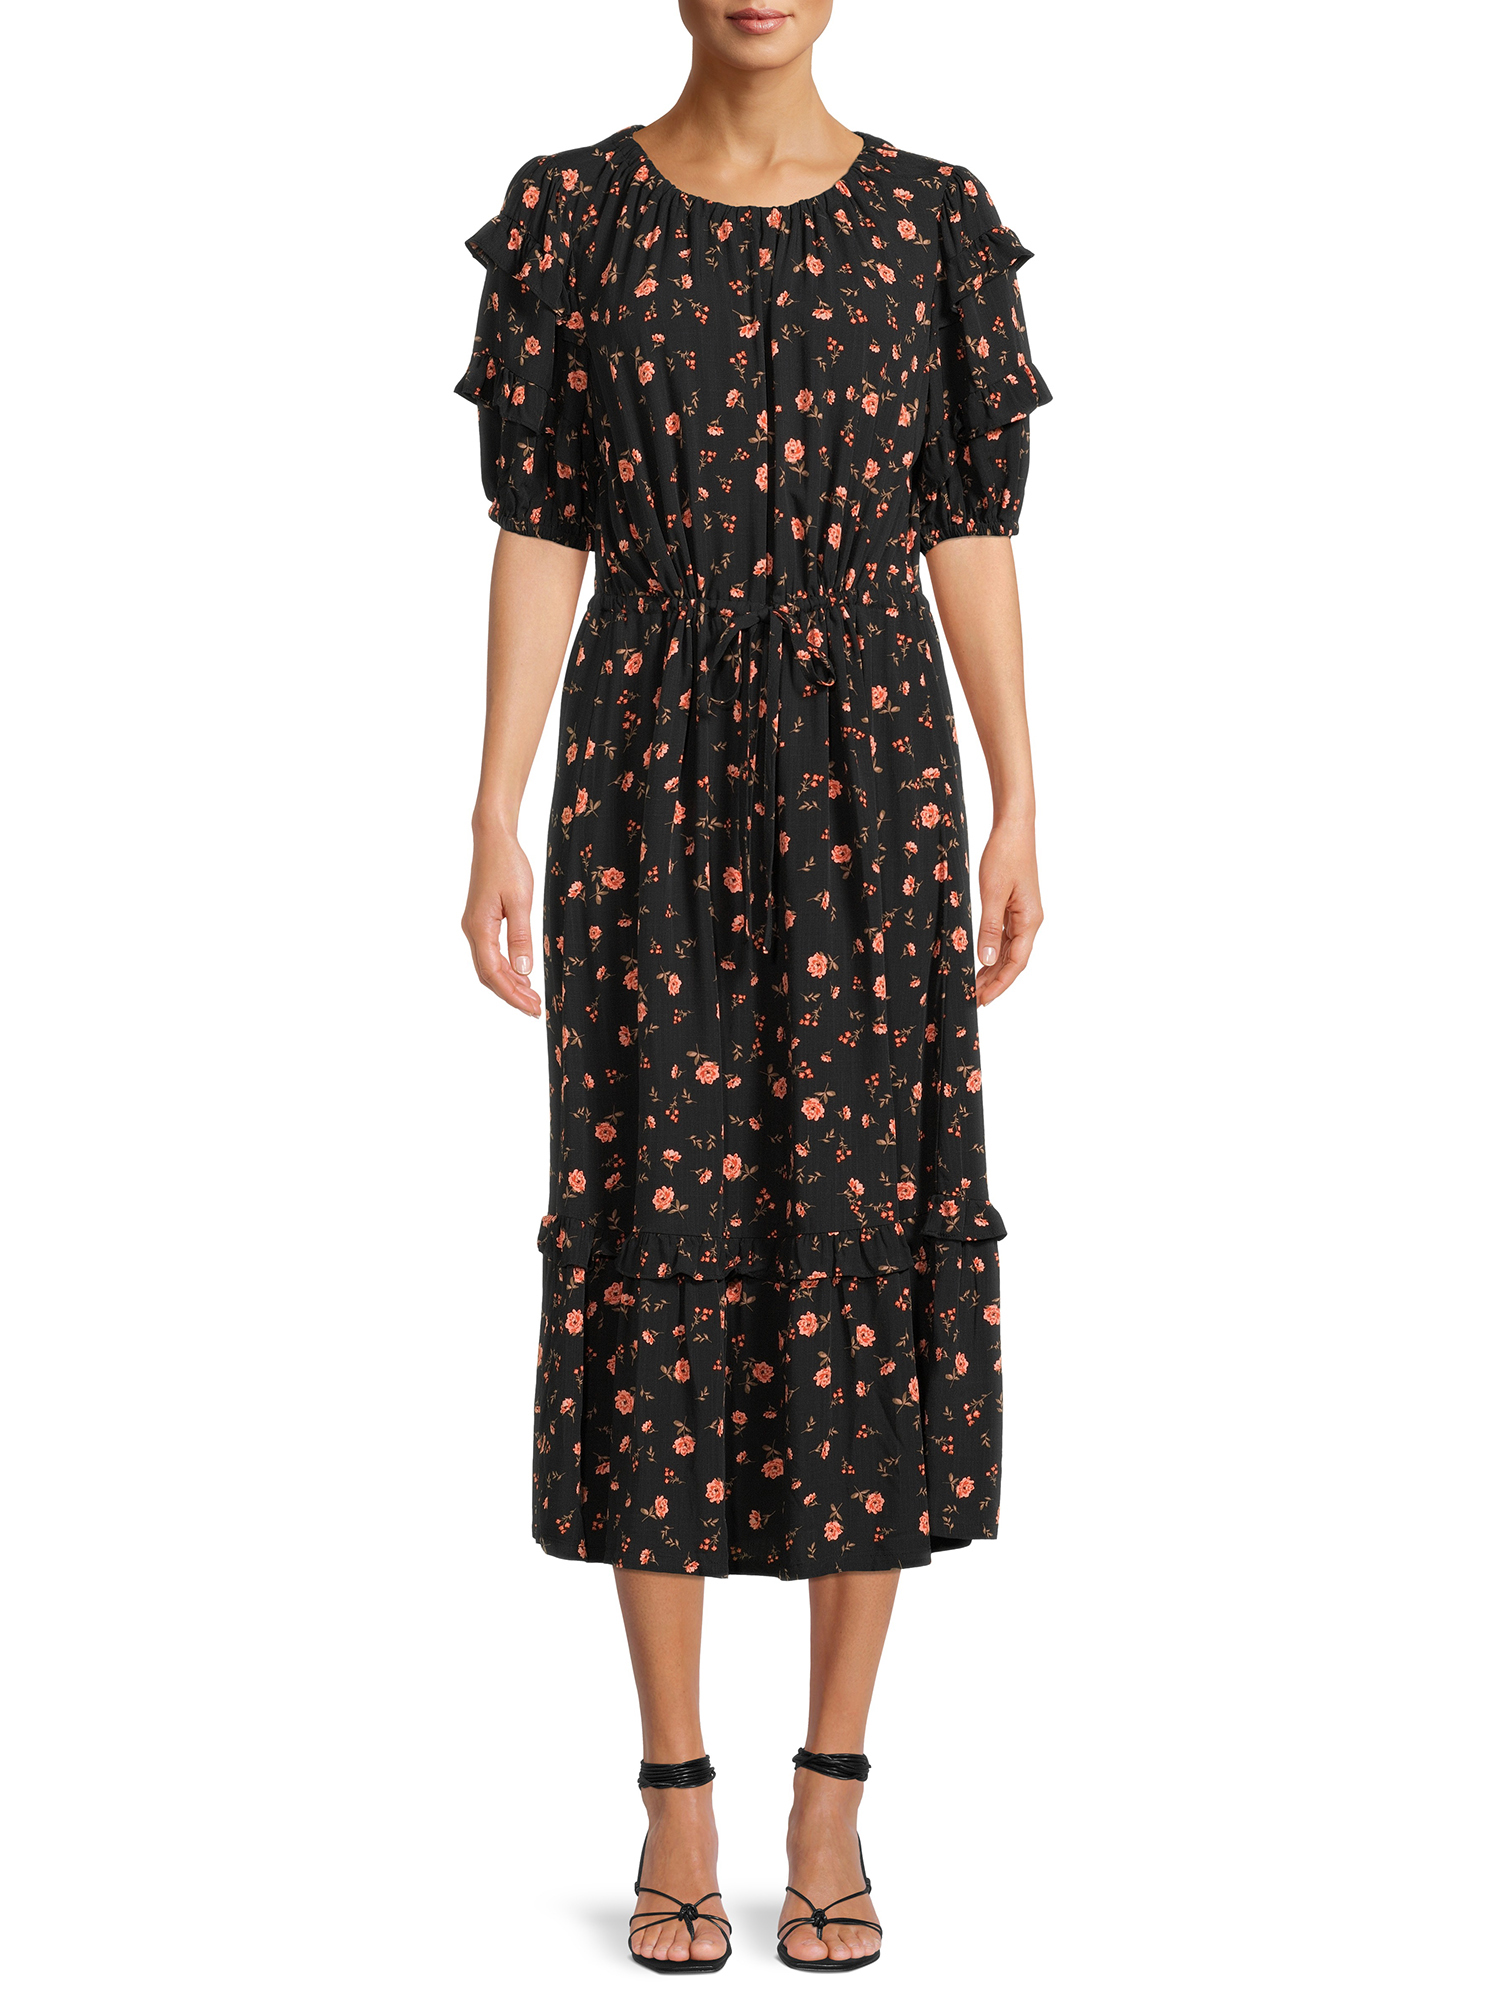 The Get Women's Tiered Ruffle Prairie Midi Dress - image 1 of 5